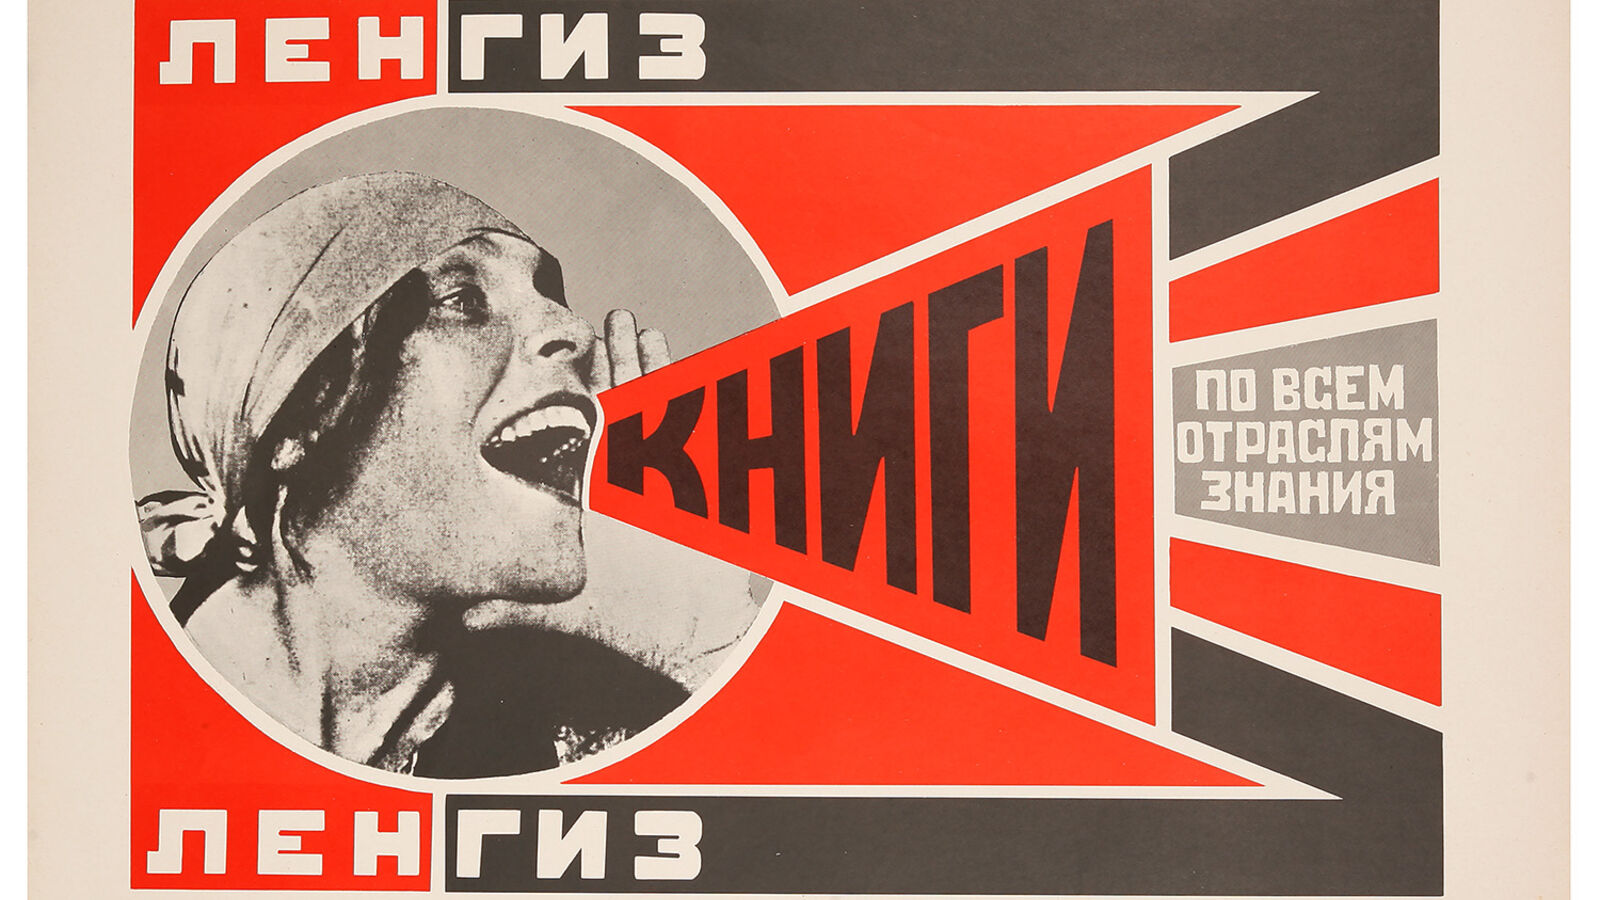 Trade Union defender of Female Labour Alexander Rodchenko Constructivism Poster 